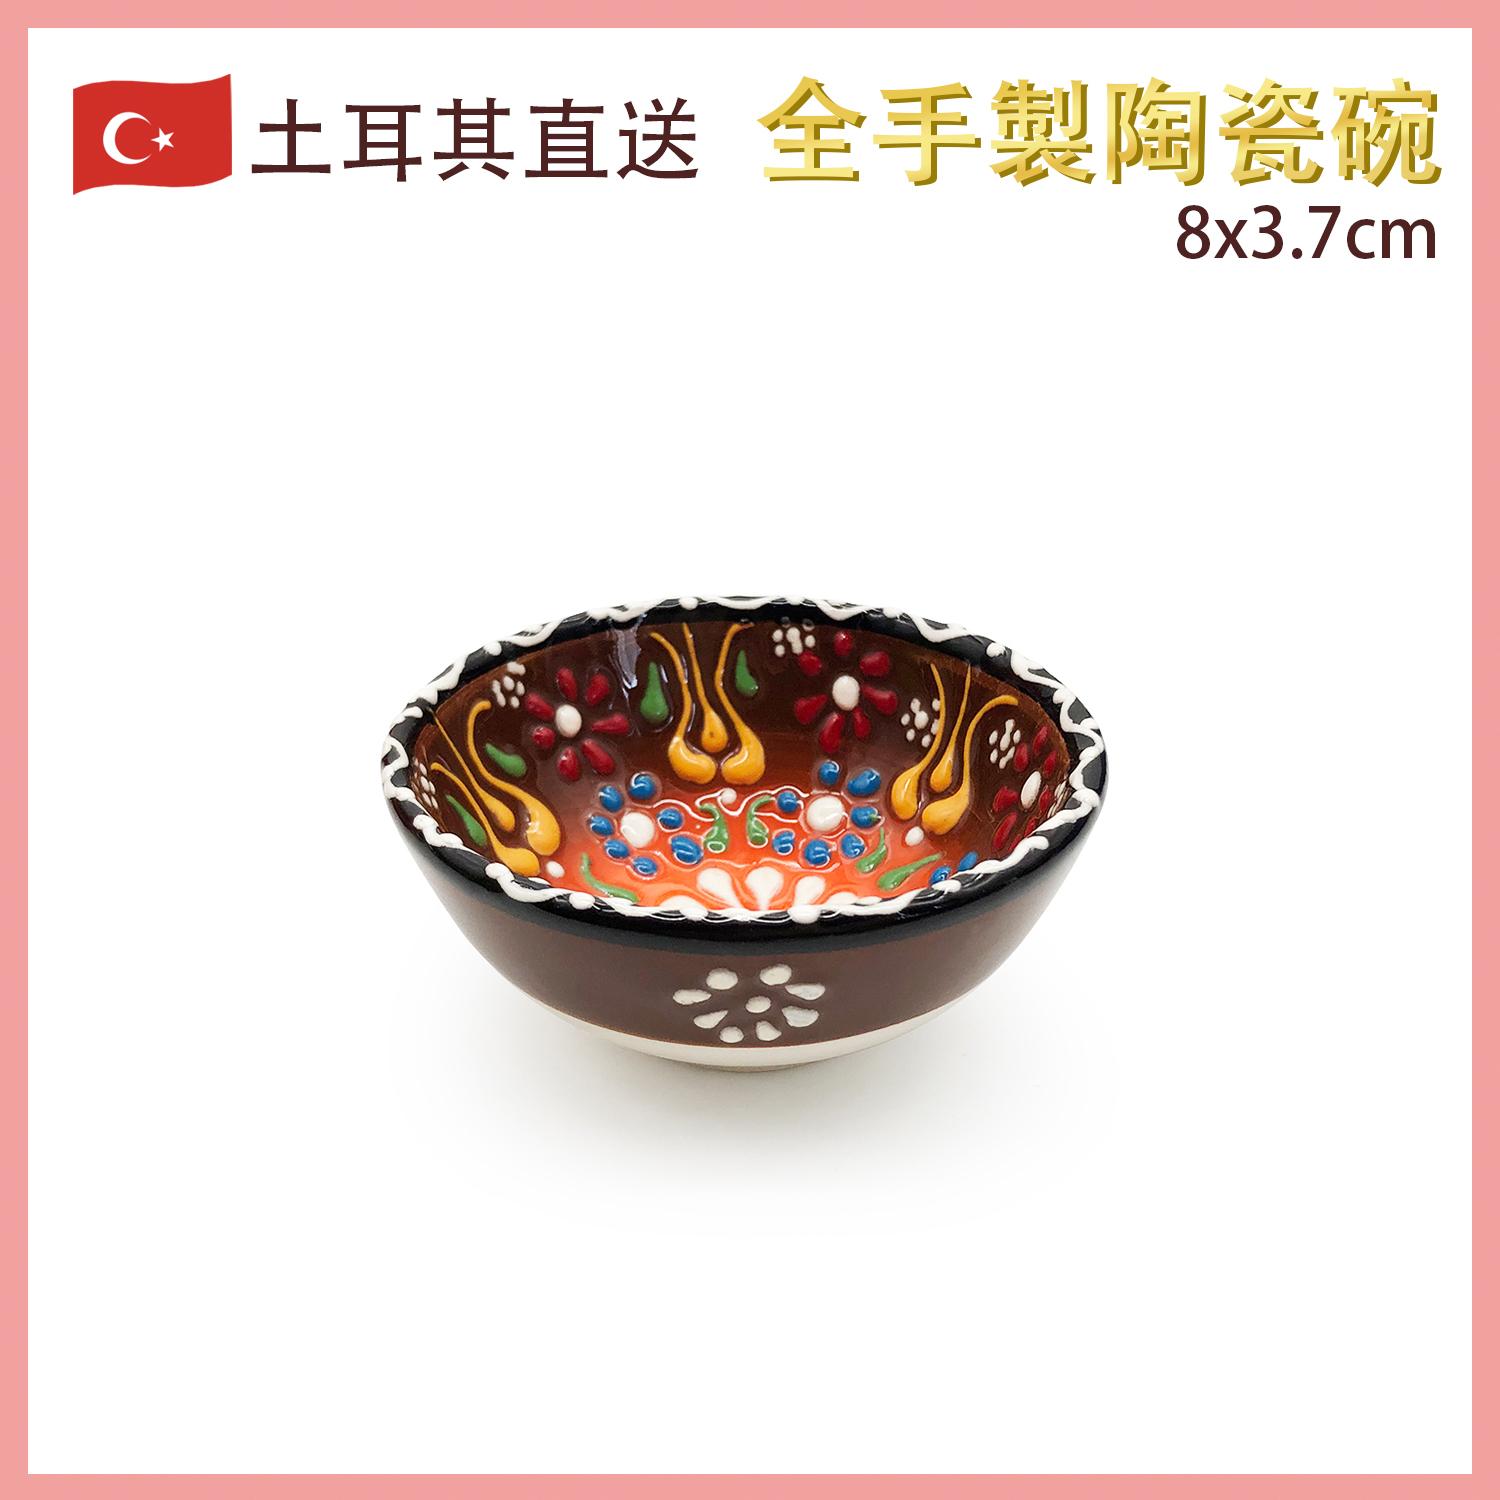 80MM手繪土耳其傳統工藝陶瓷碗， 土耳其餐具奧斯曼帝國浮雕圖案土耳其藝術時尚潮物(VTR-CERAMIC-BOWL-80MM-30007)